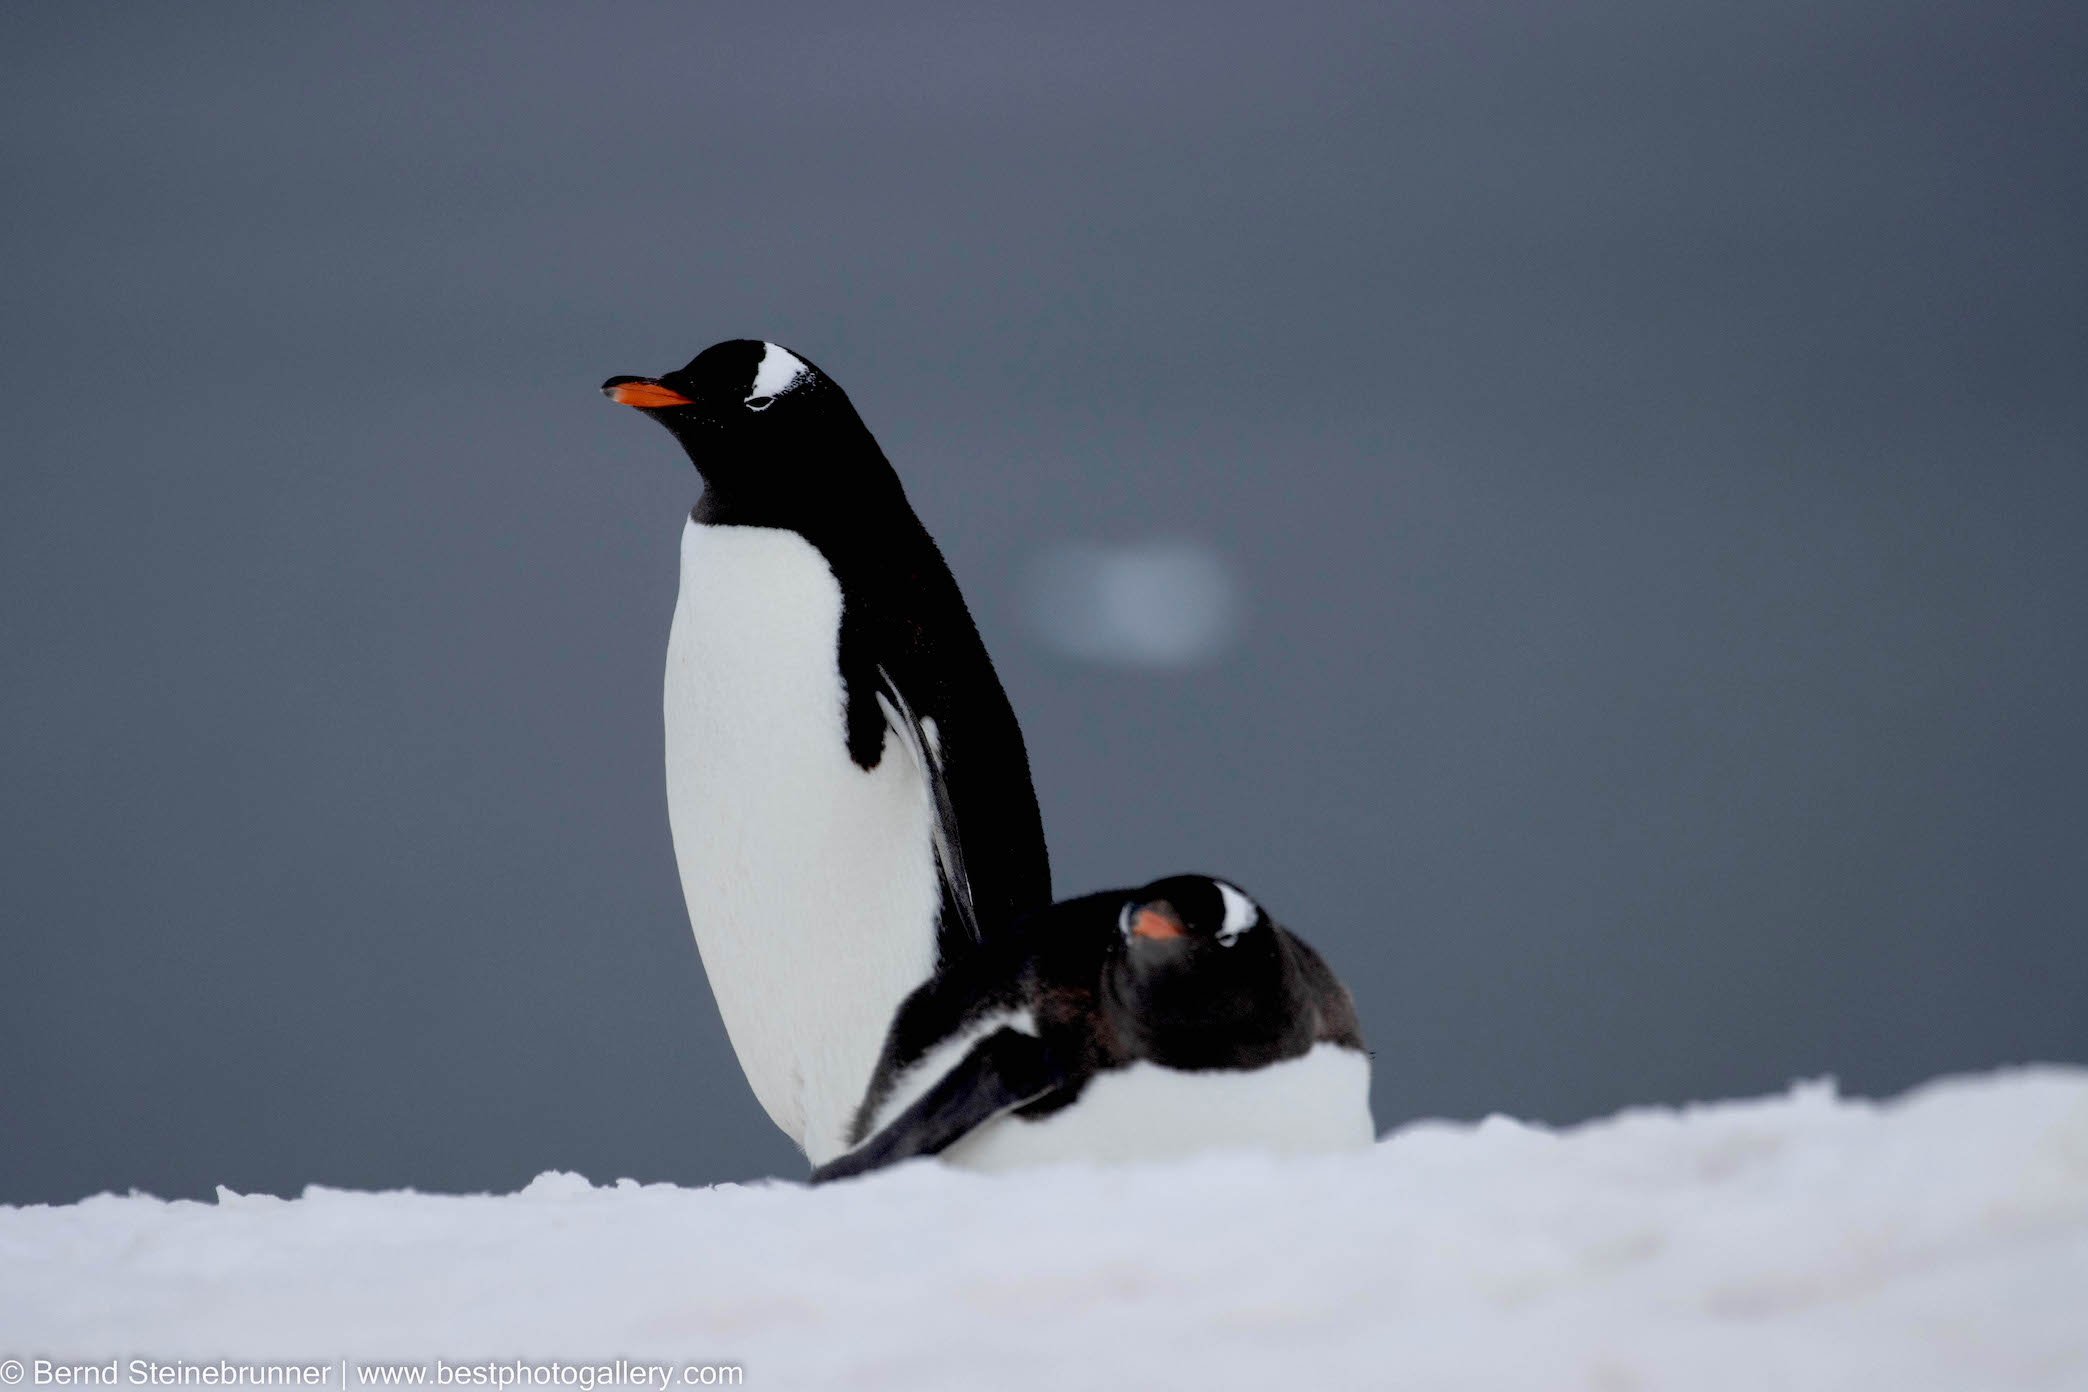 Guarding the next generation. Gentoo penguins